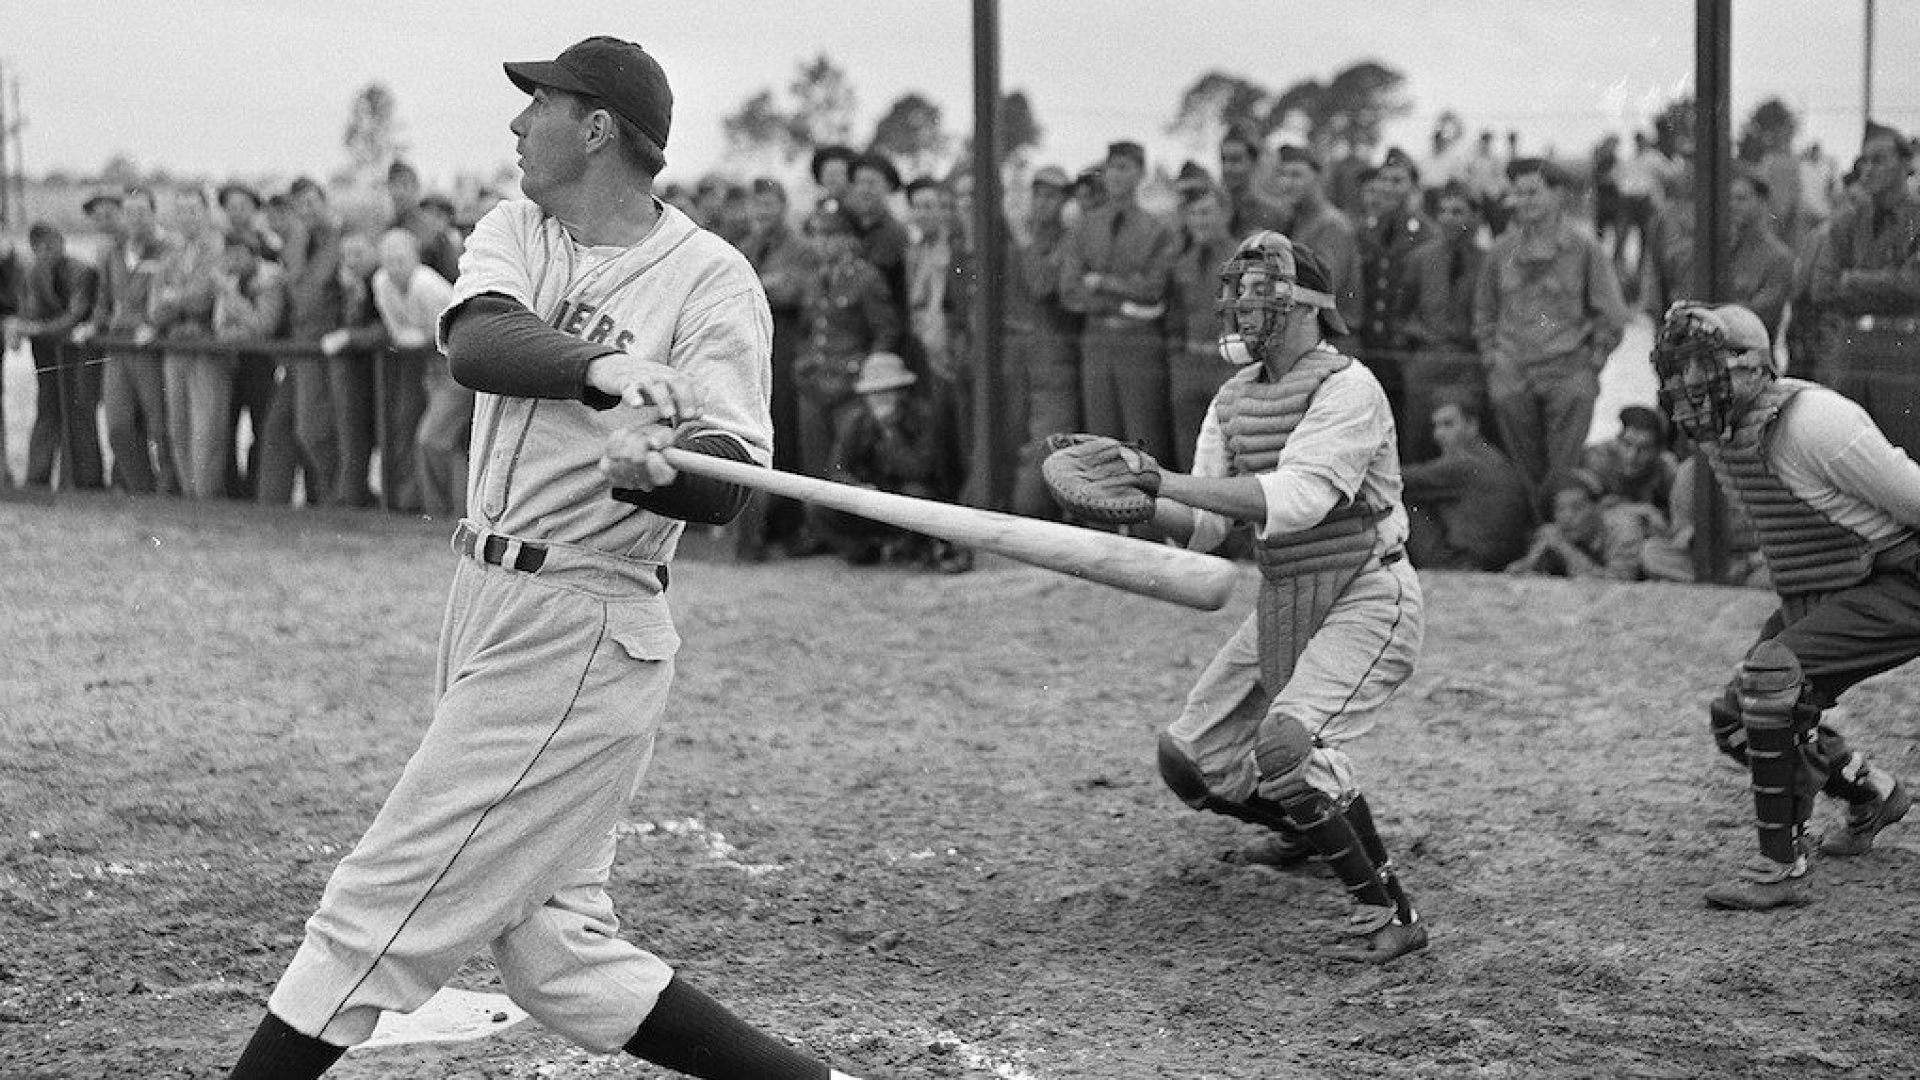 Vintage baseball player|Brian Sheehy Headshot|A man in a vintage baseball uniform